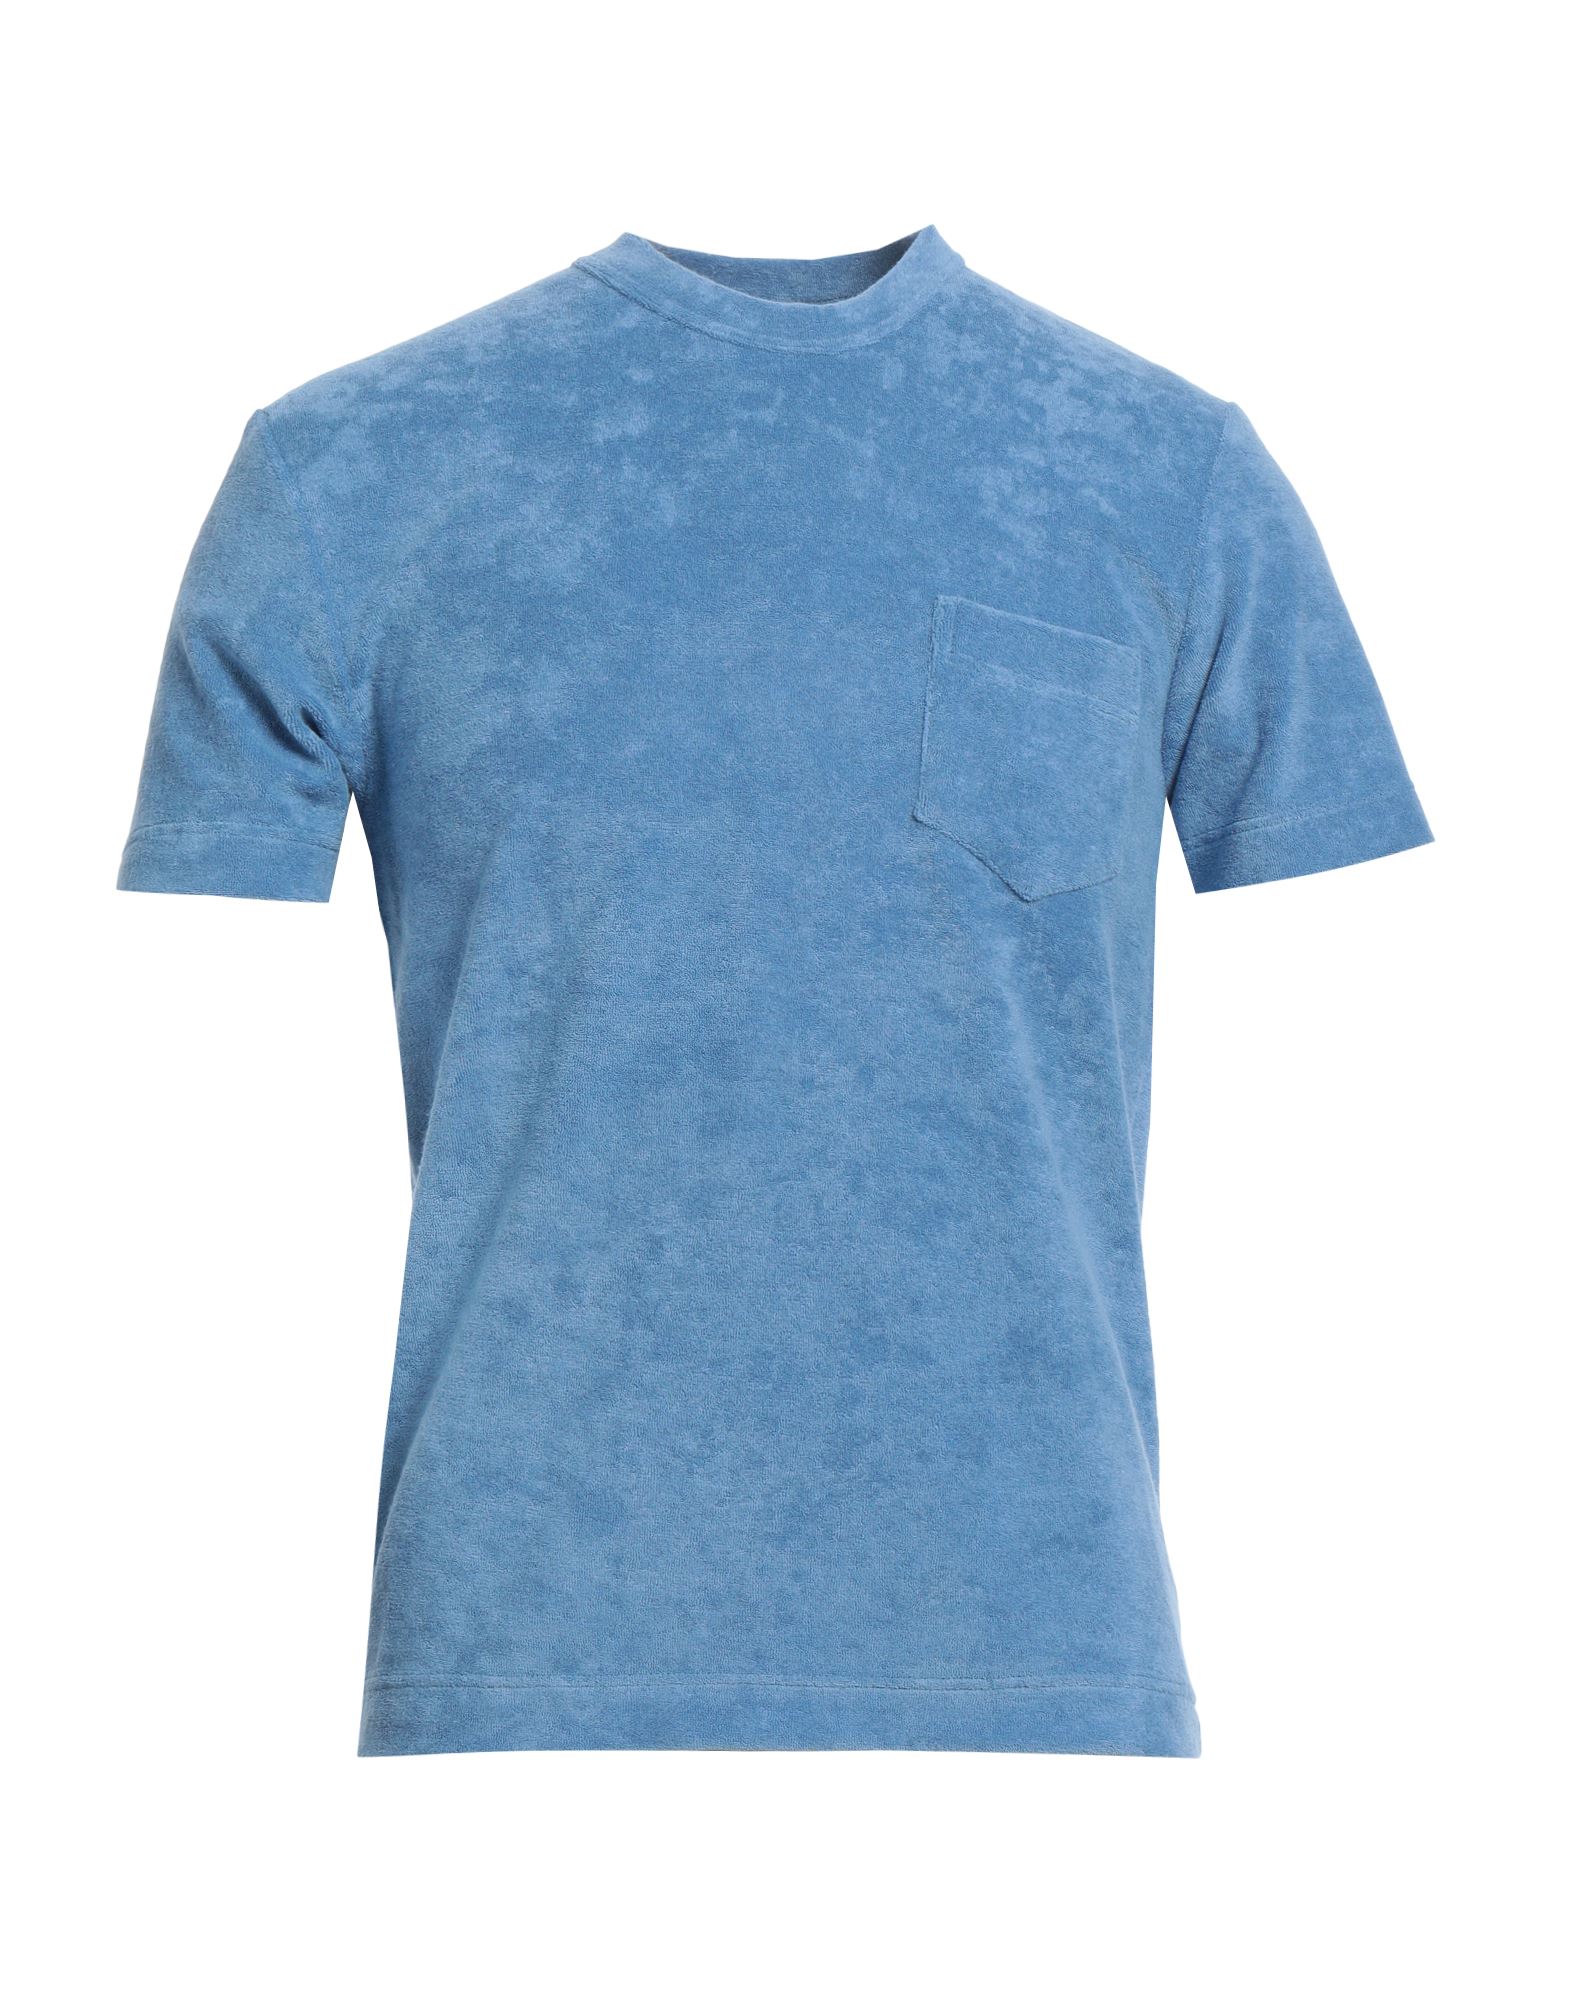 HOWLIN' T-shirts Herren Blaugrau von HOWLIN'